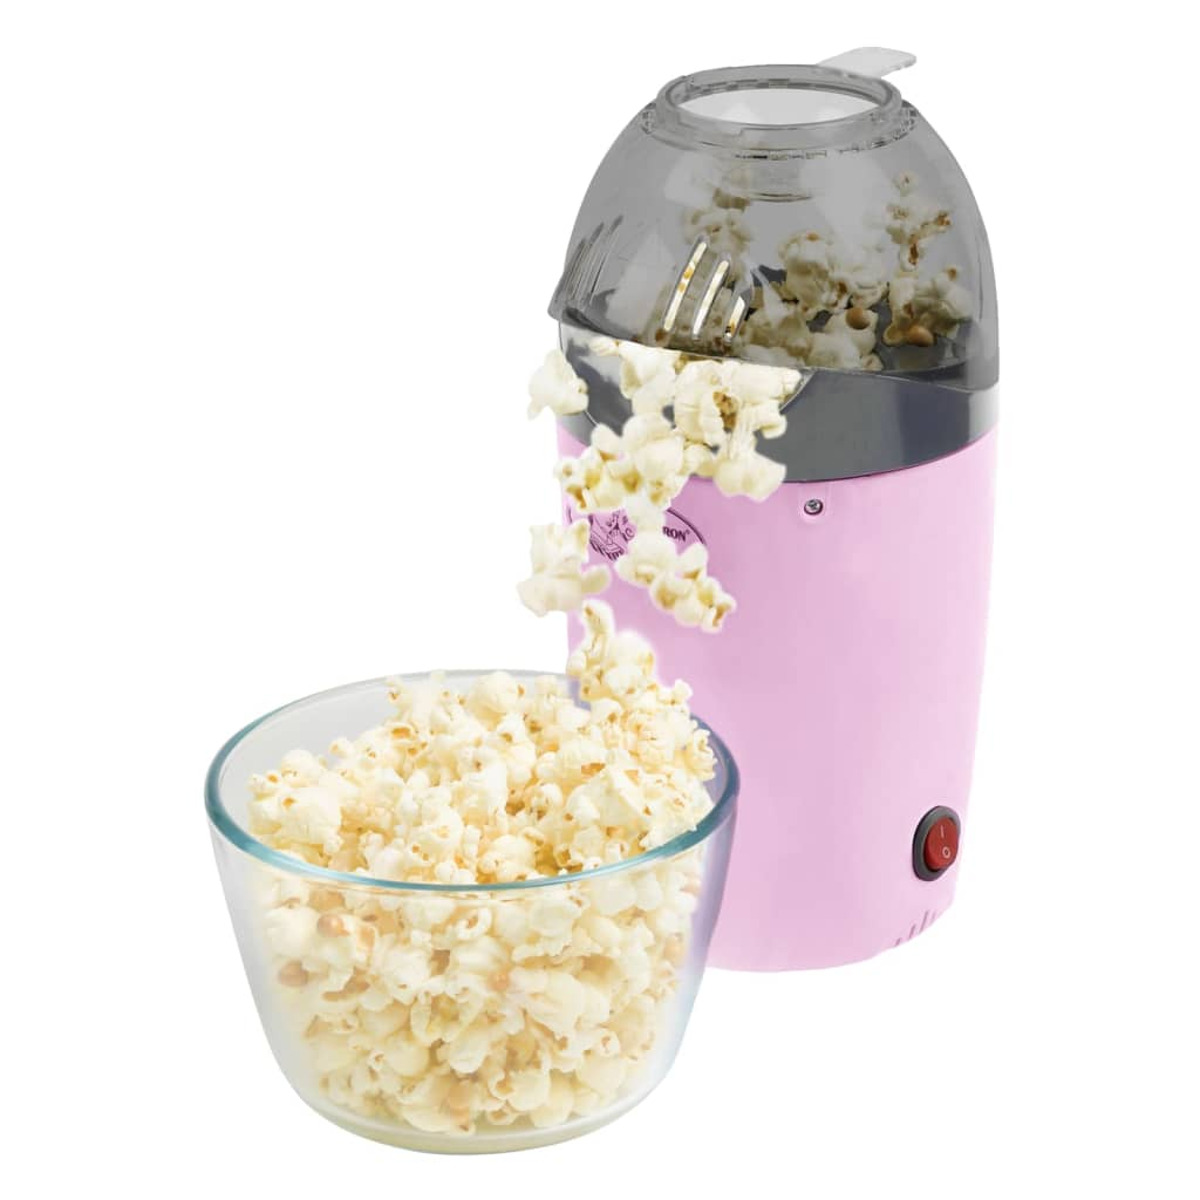 BESTRON 440256 Popcornmaker